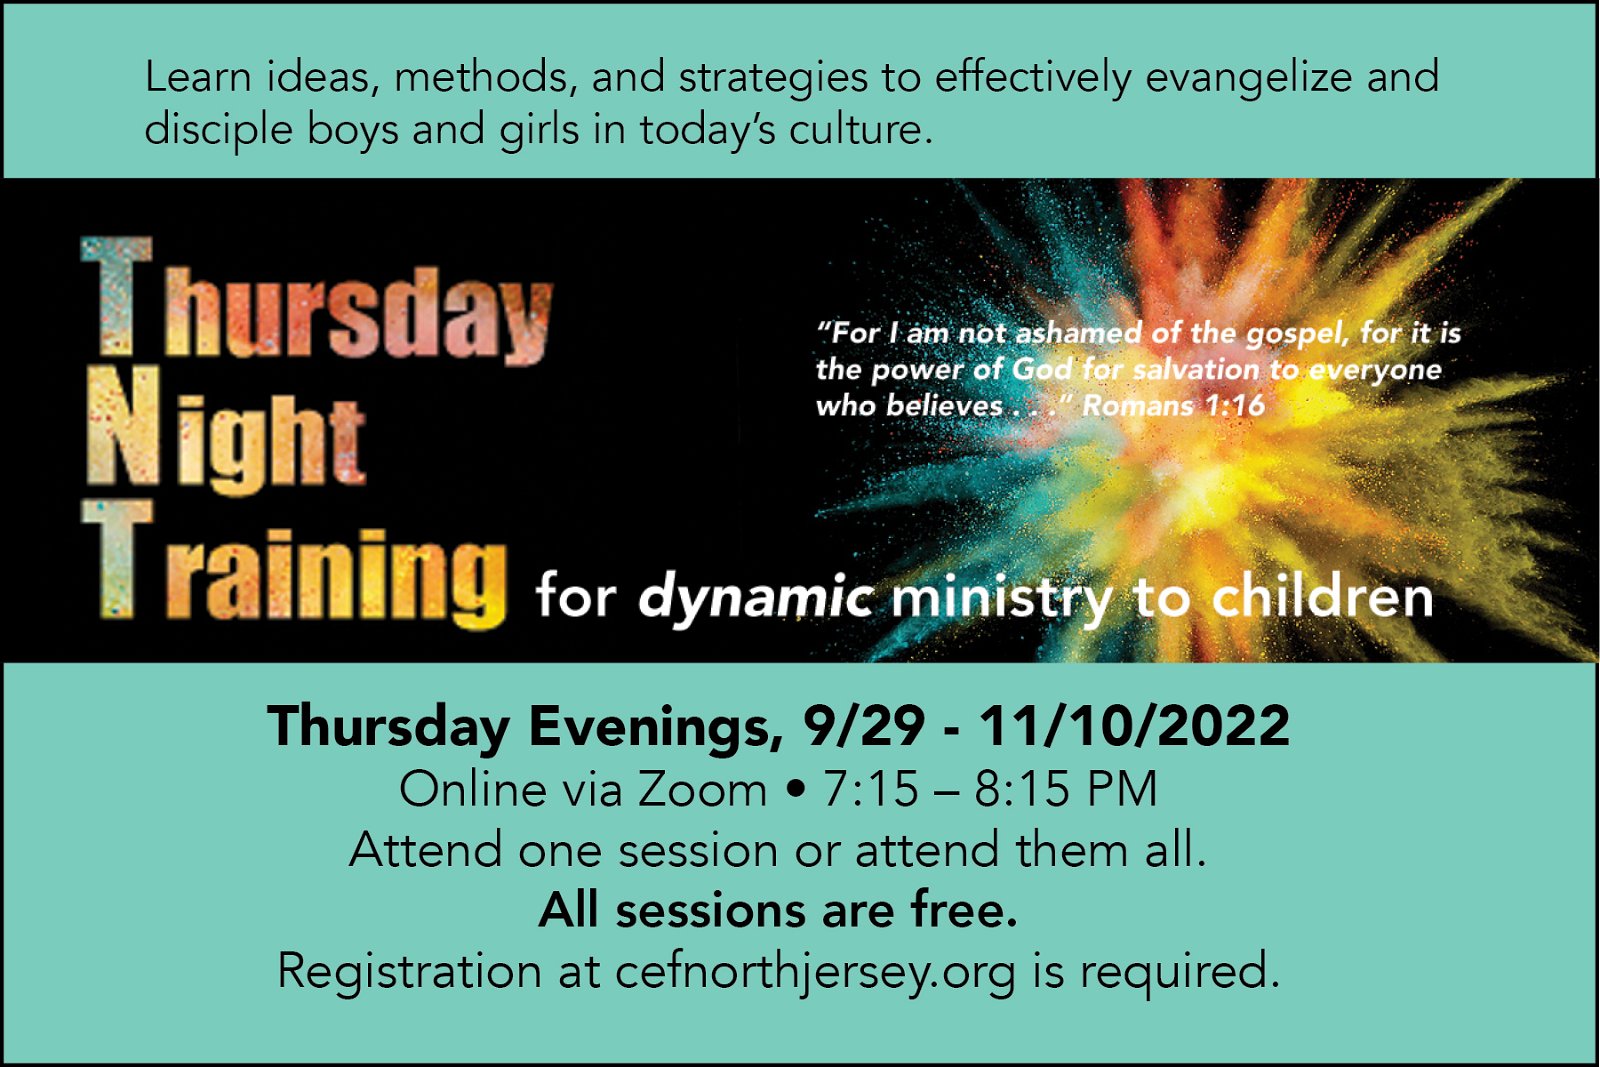 Thursday Night Training Information, Thursday evenings 9/20-11/10, 7:15 PM via Zoom